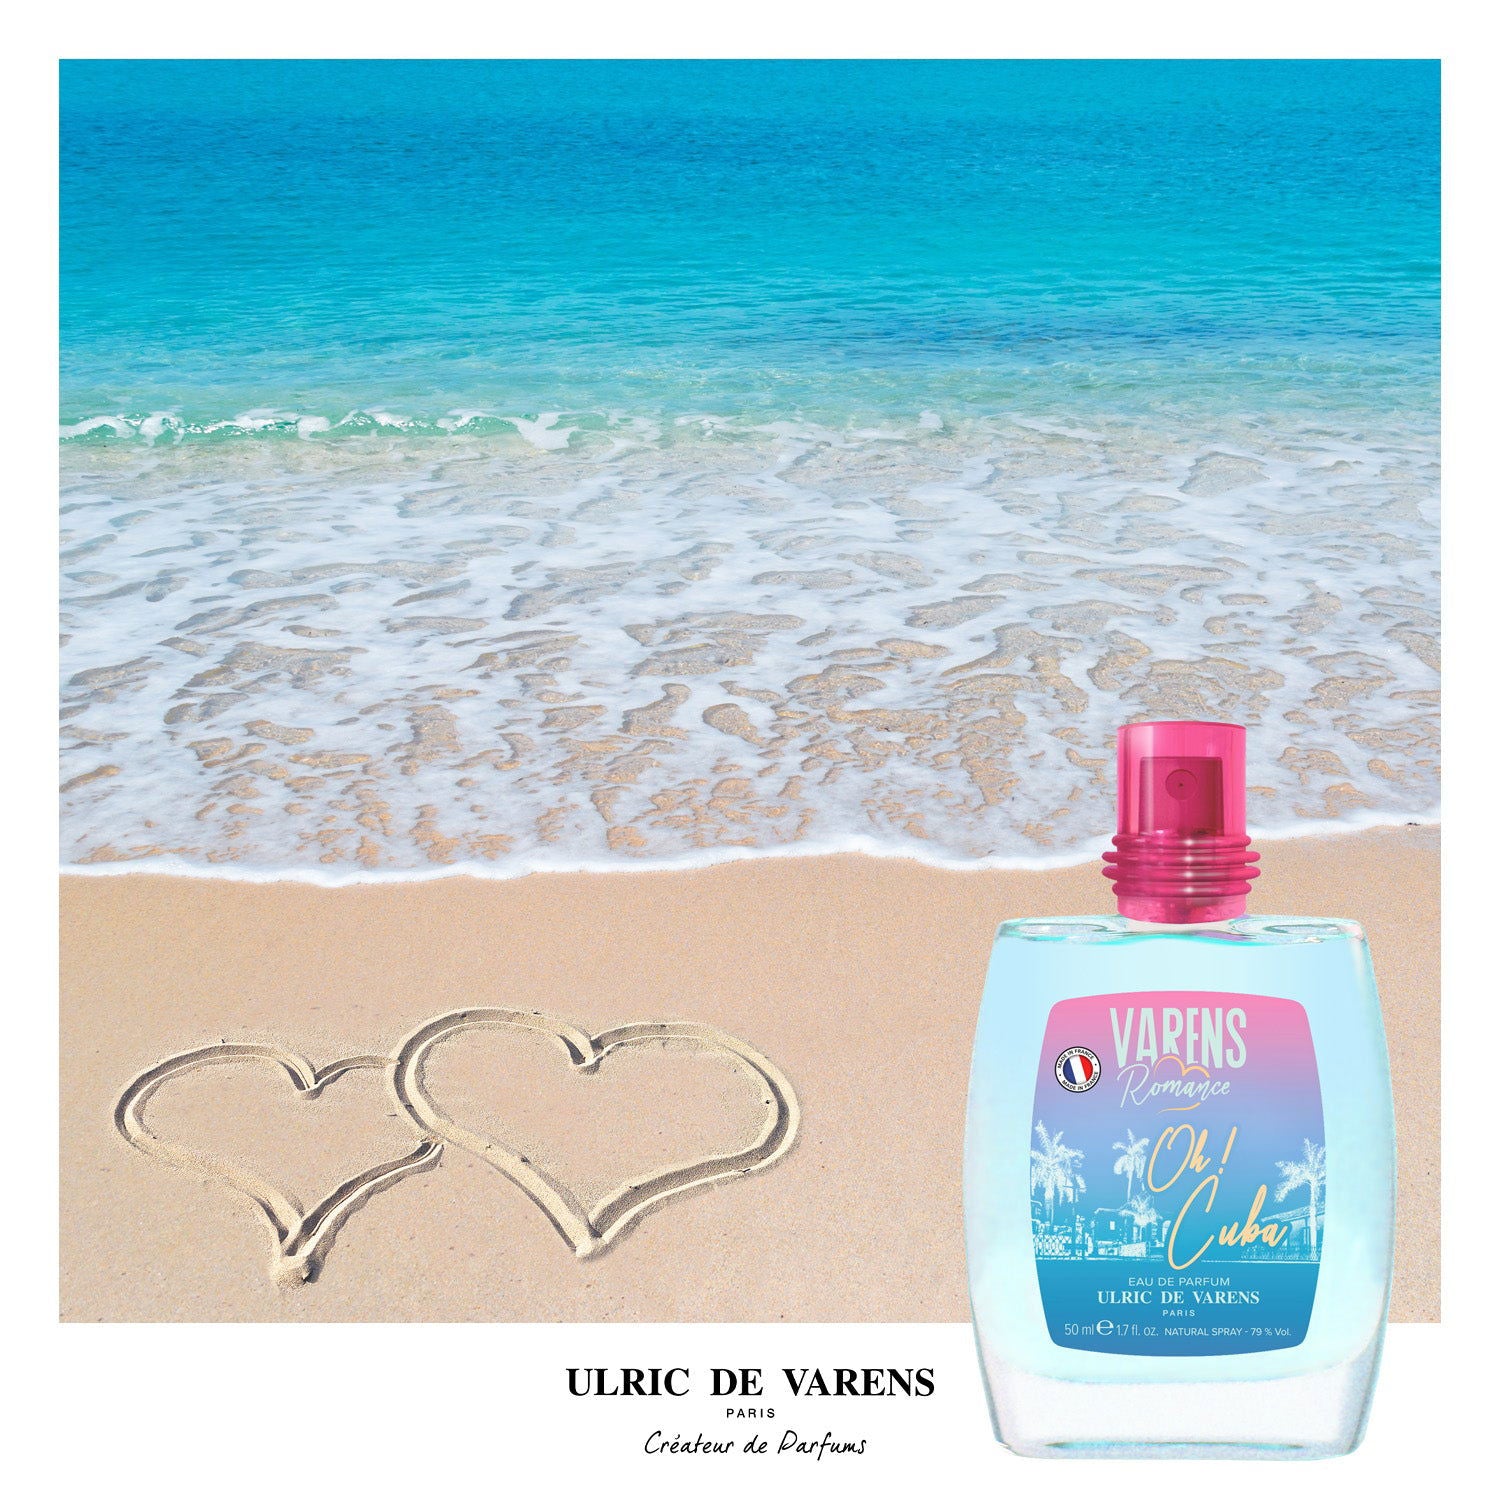 Varens Romance Oh! Cuba - Ulric de Varens -  - #tag1# - #tag2# - #tag3# - #tag4#